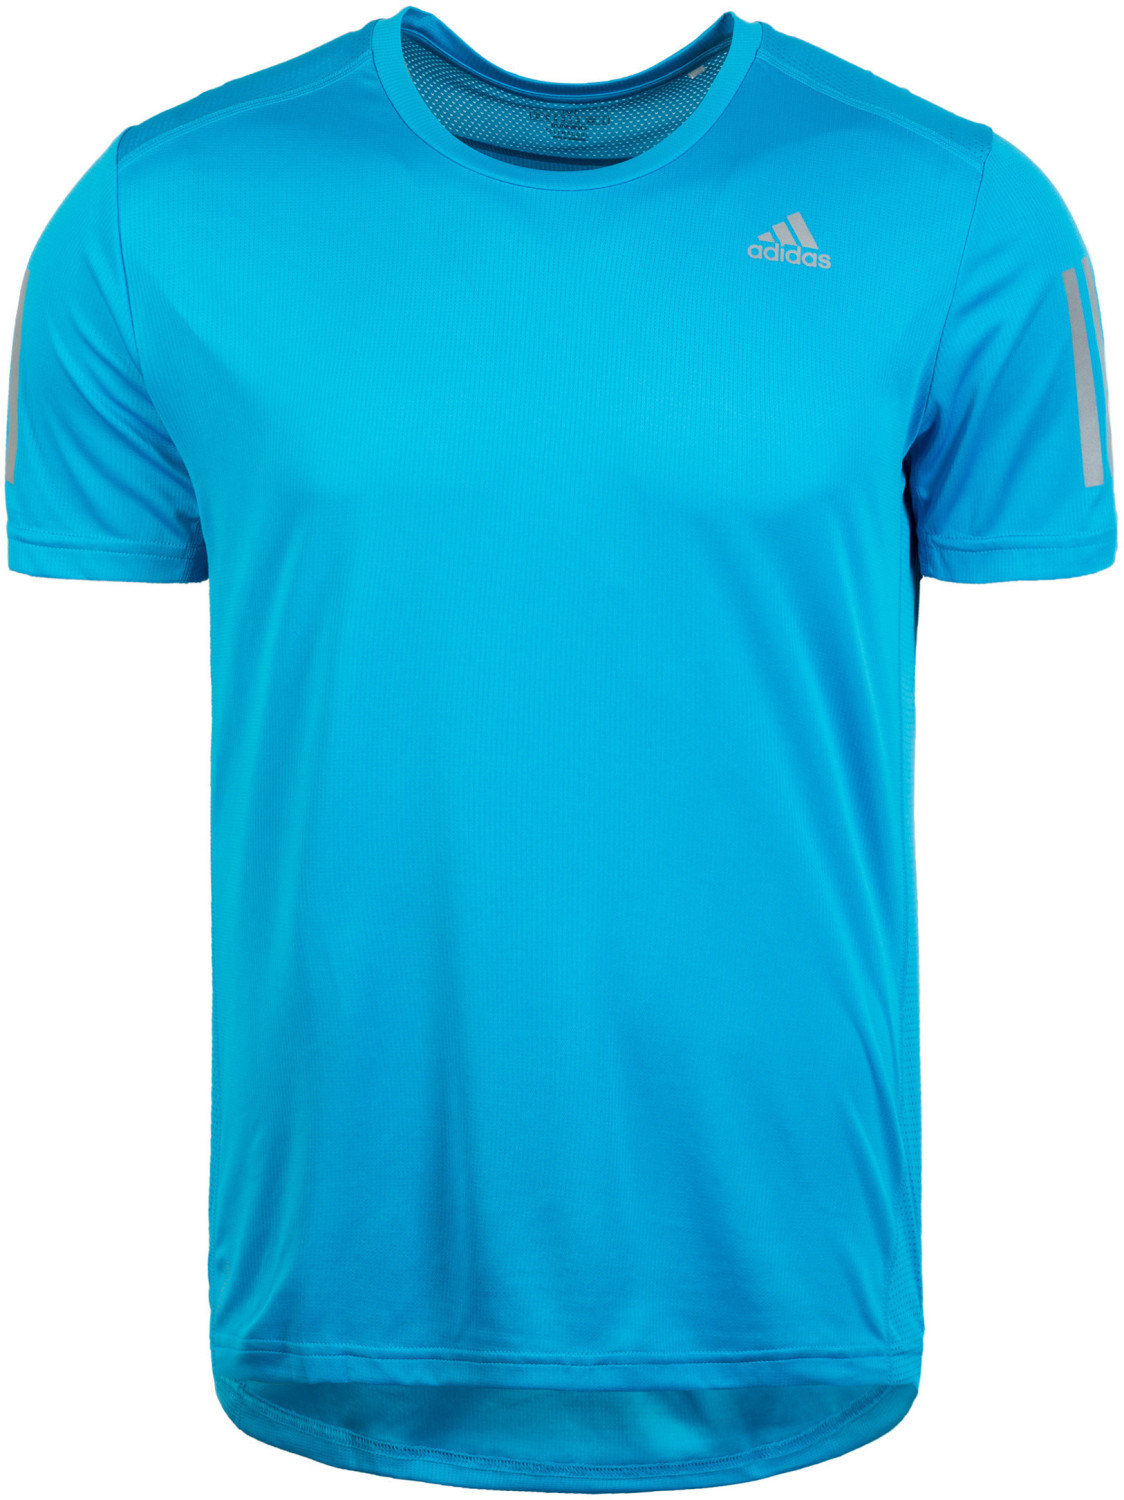 Adidas Own The Run T-Shirt blue/reflective silver